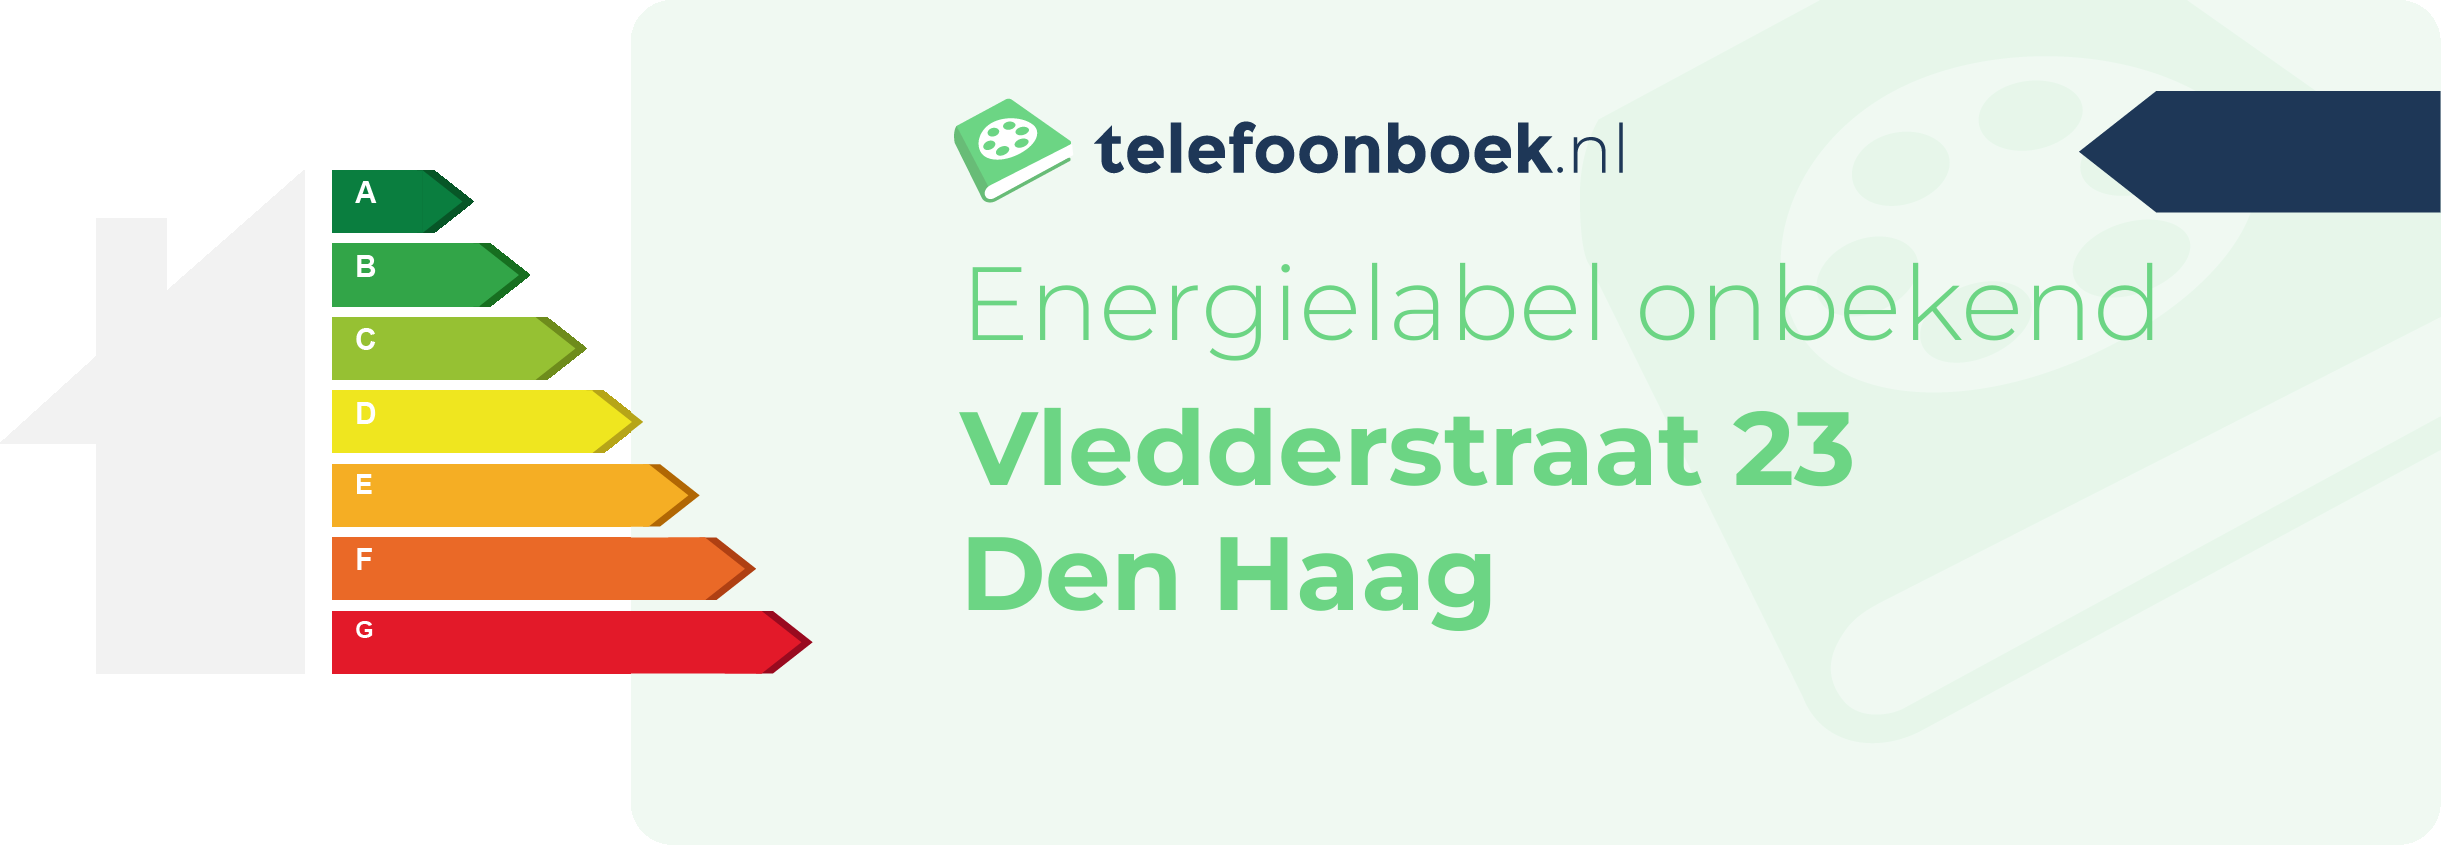 Energielabel Vledderstraat 23 Den Haag